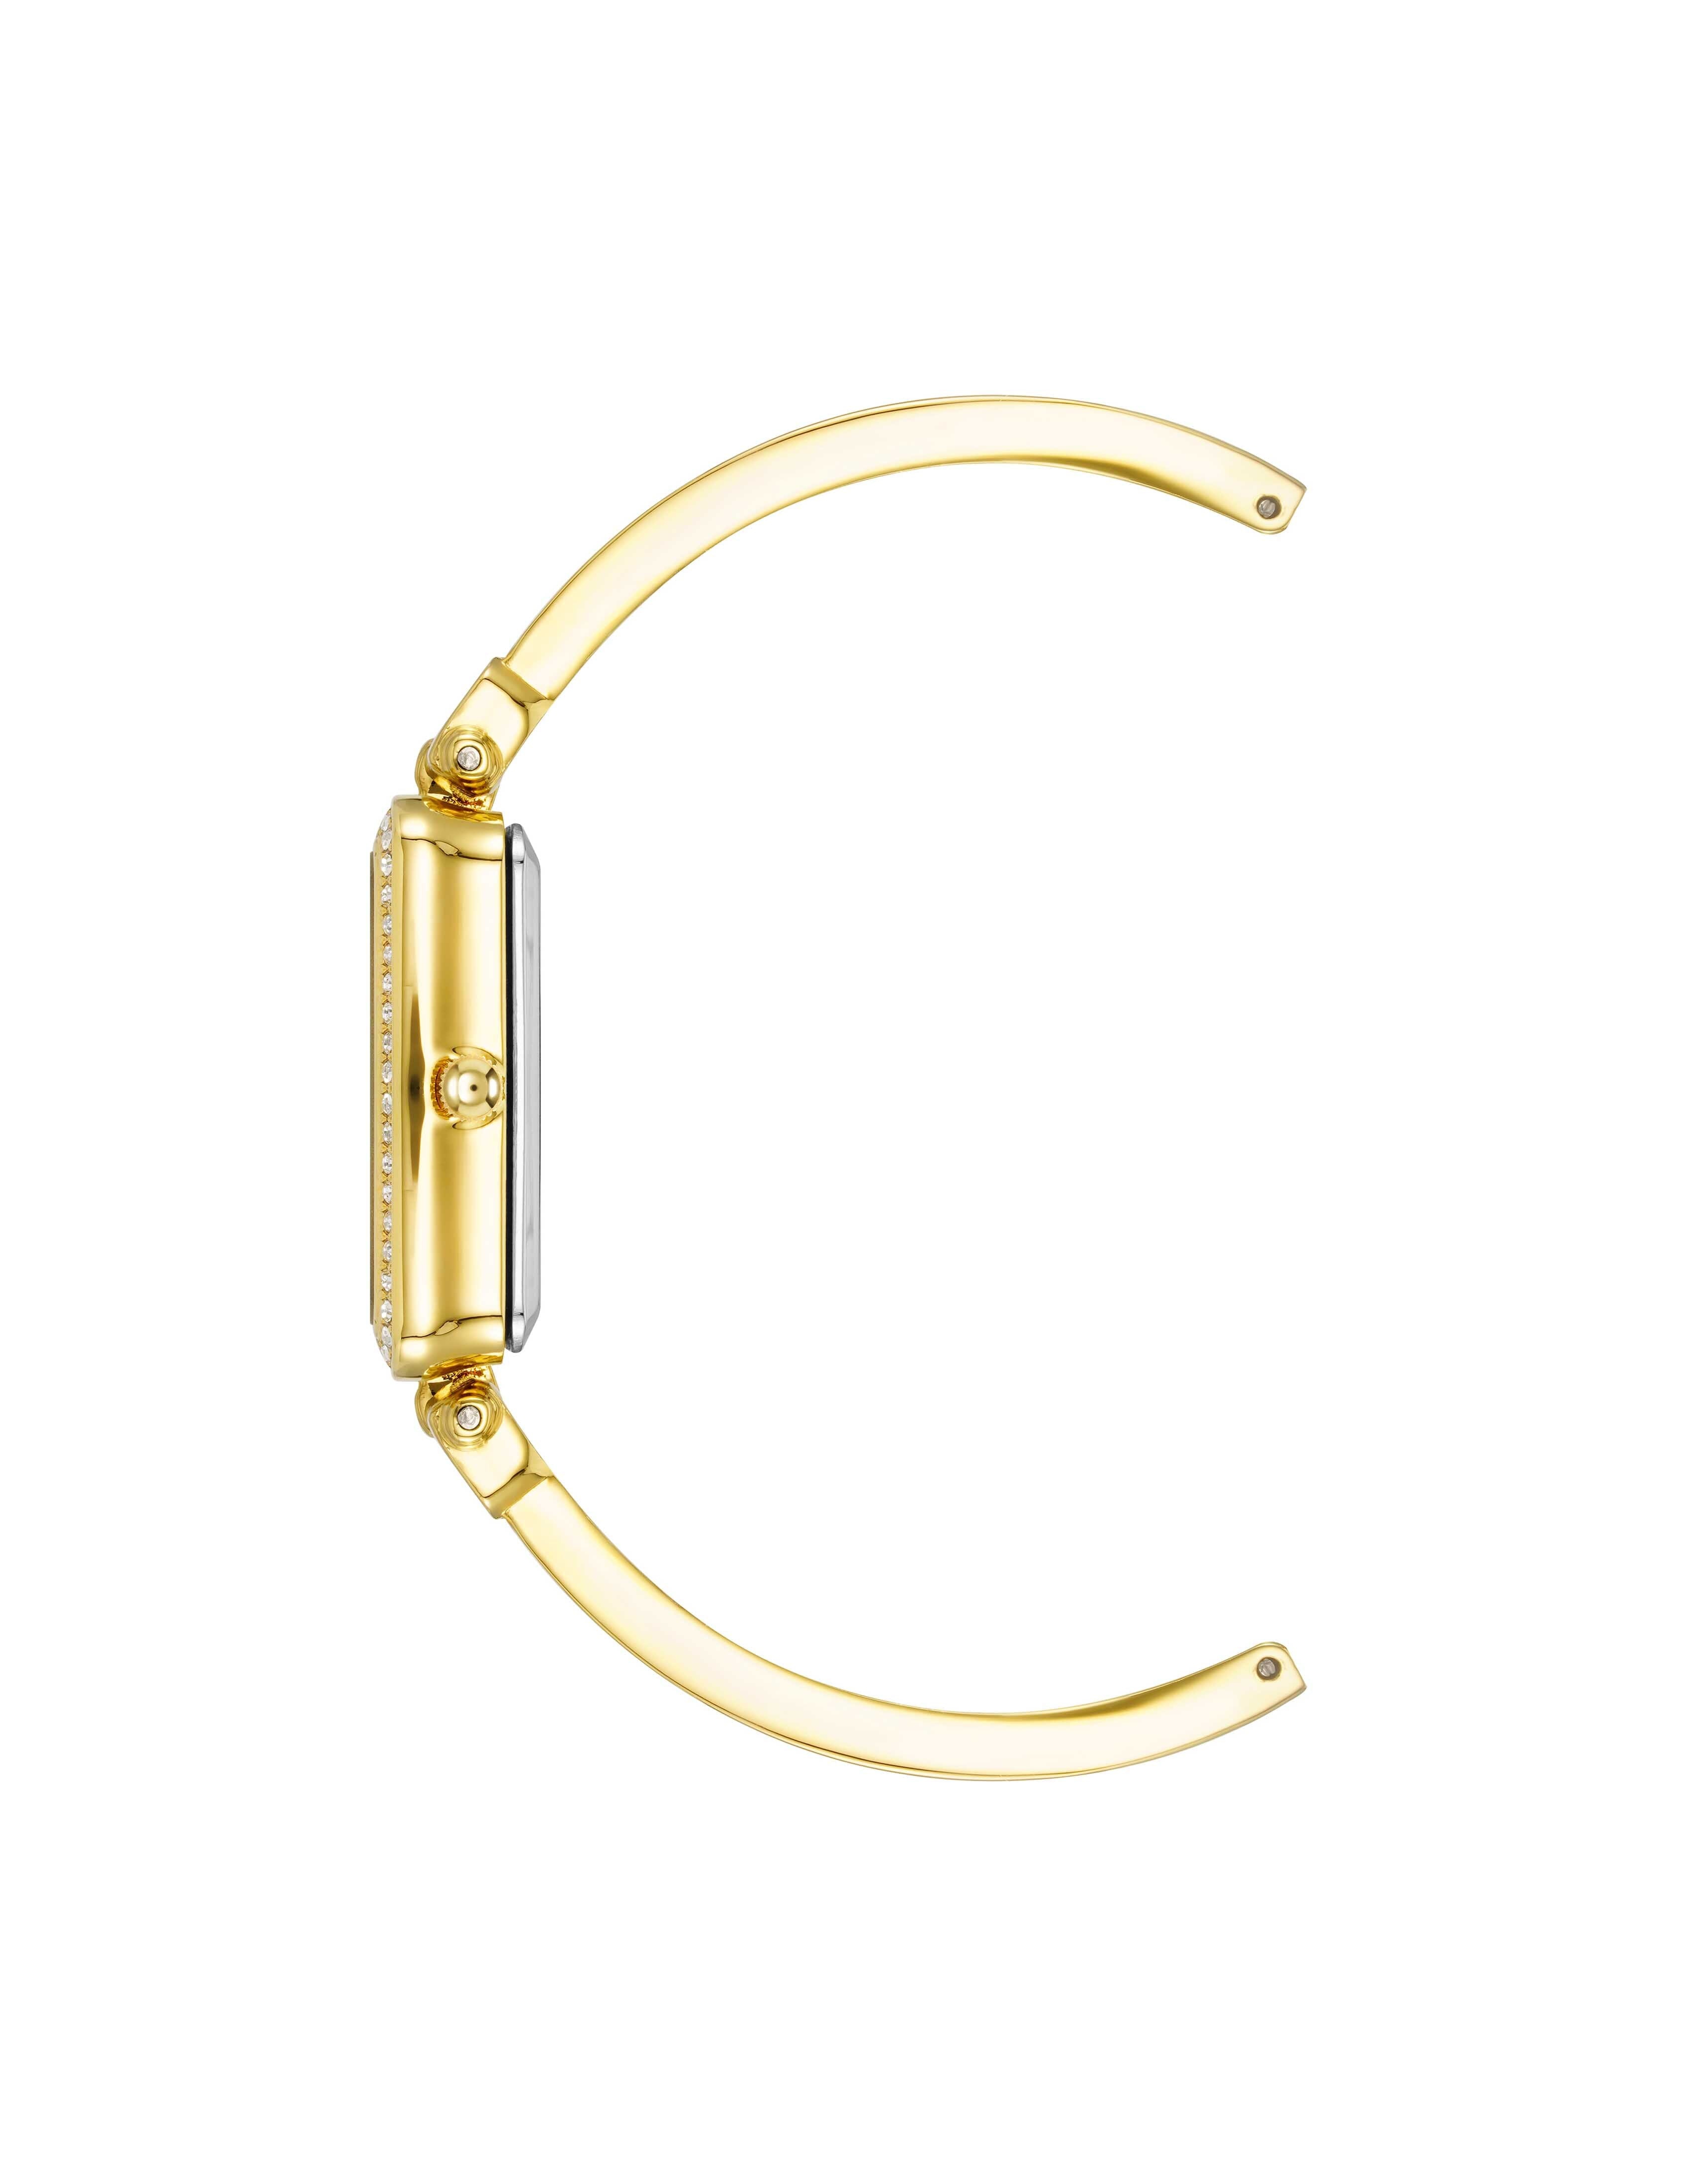 Anne Klein Women's Rectangular Case Watch and Bracelet Set in Tan/Gold-Tone